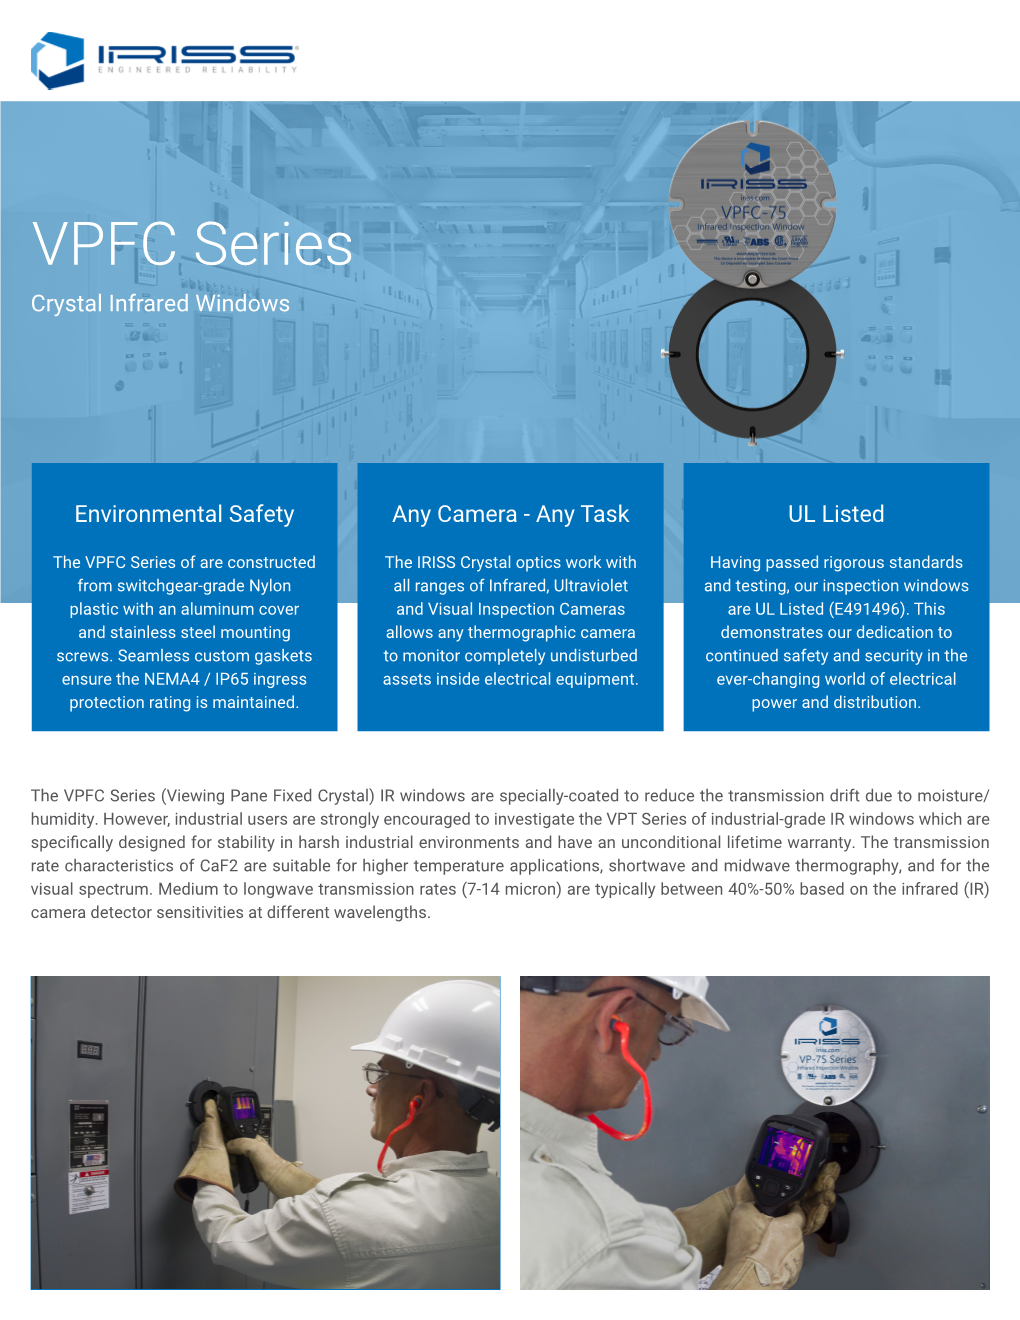 VPFC Series Crystal Infrared Windows